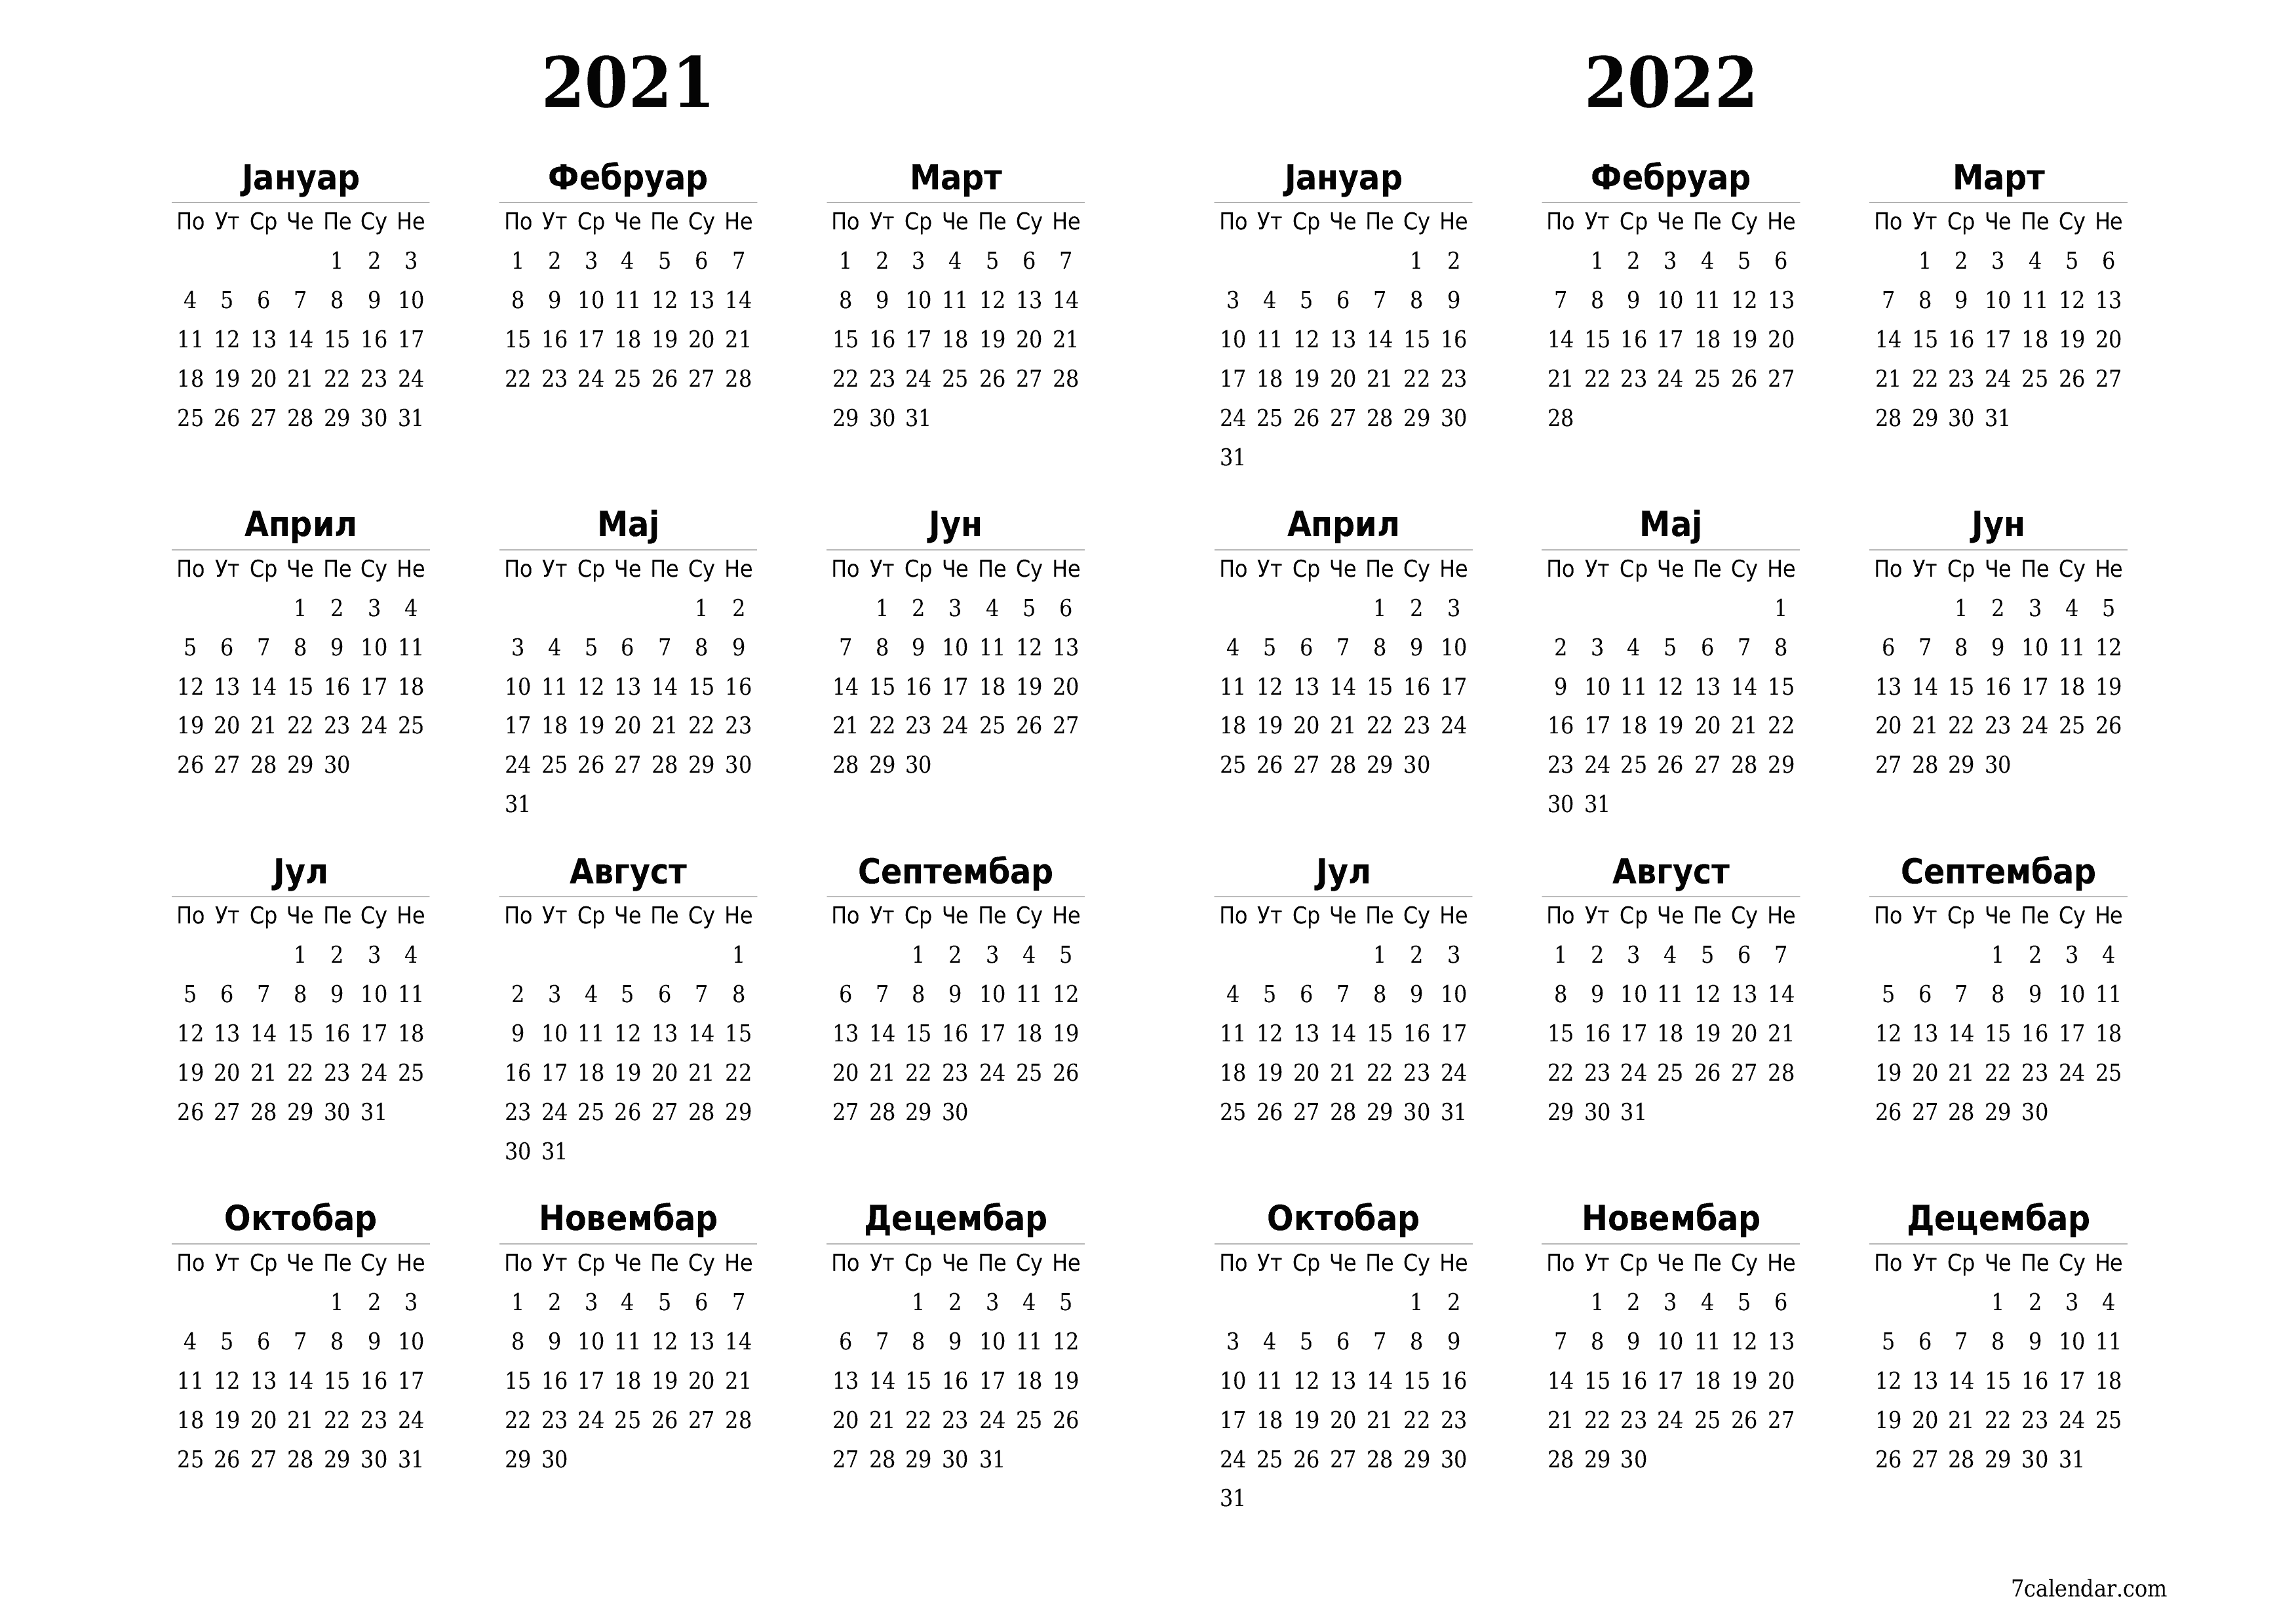  за штампање зидни шаблон а бесплатни хоризонталниј Годишње календар Јануар (Јан) 2021